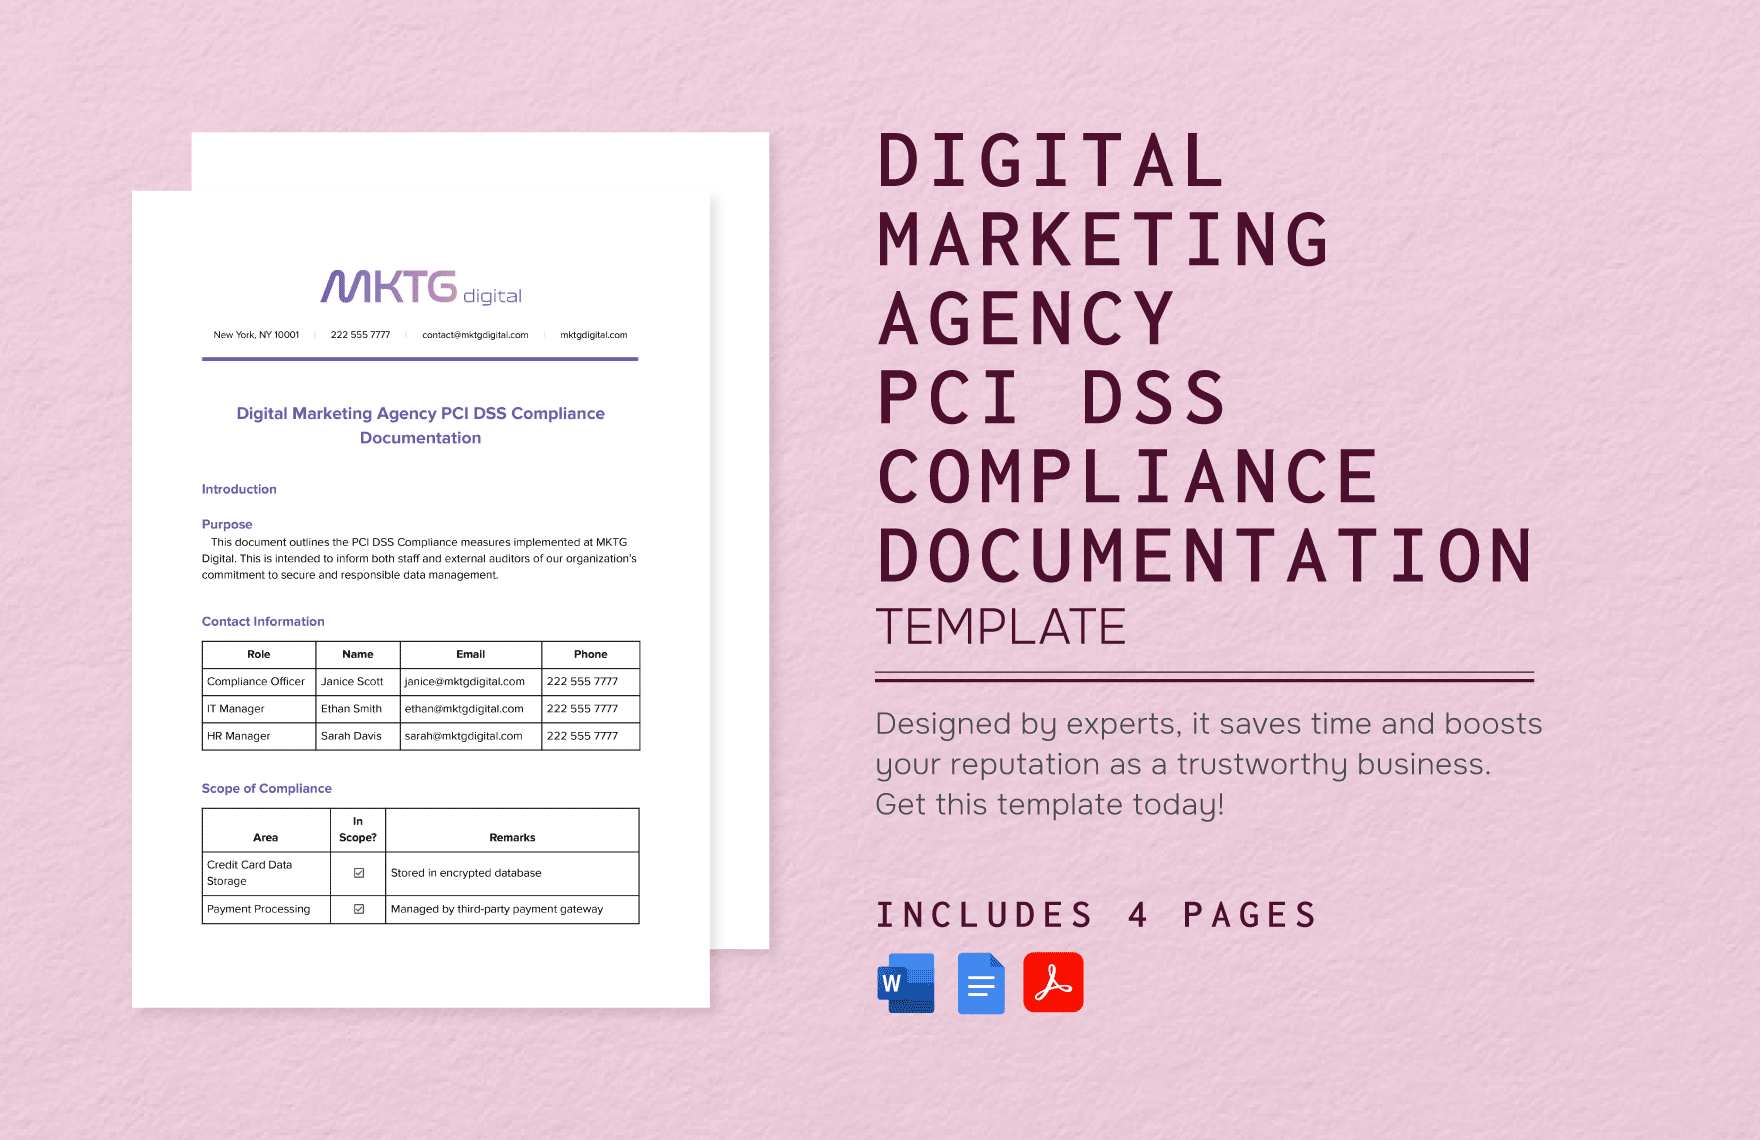 Digital Marketing Agency PCI DSS Compliance Documentation Template